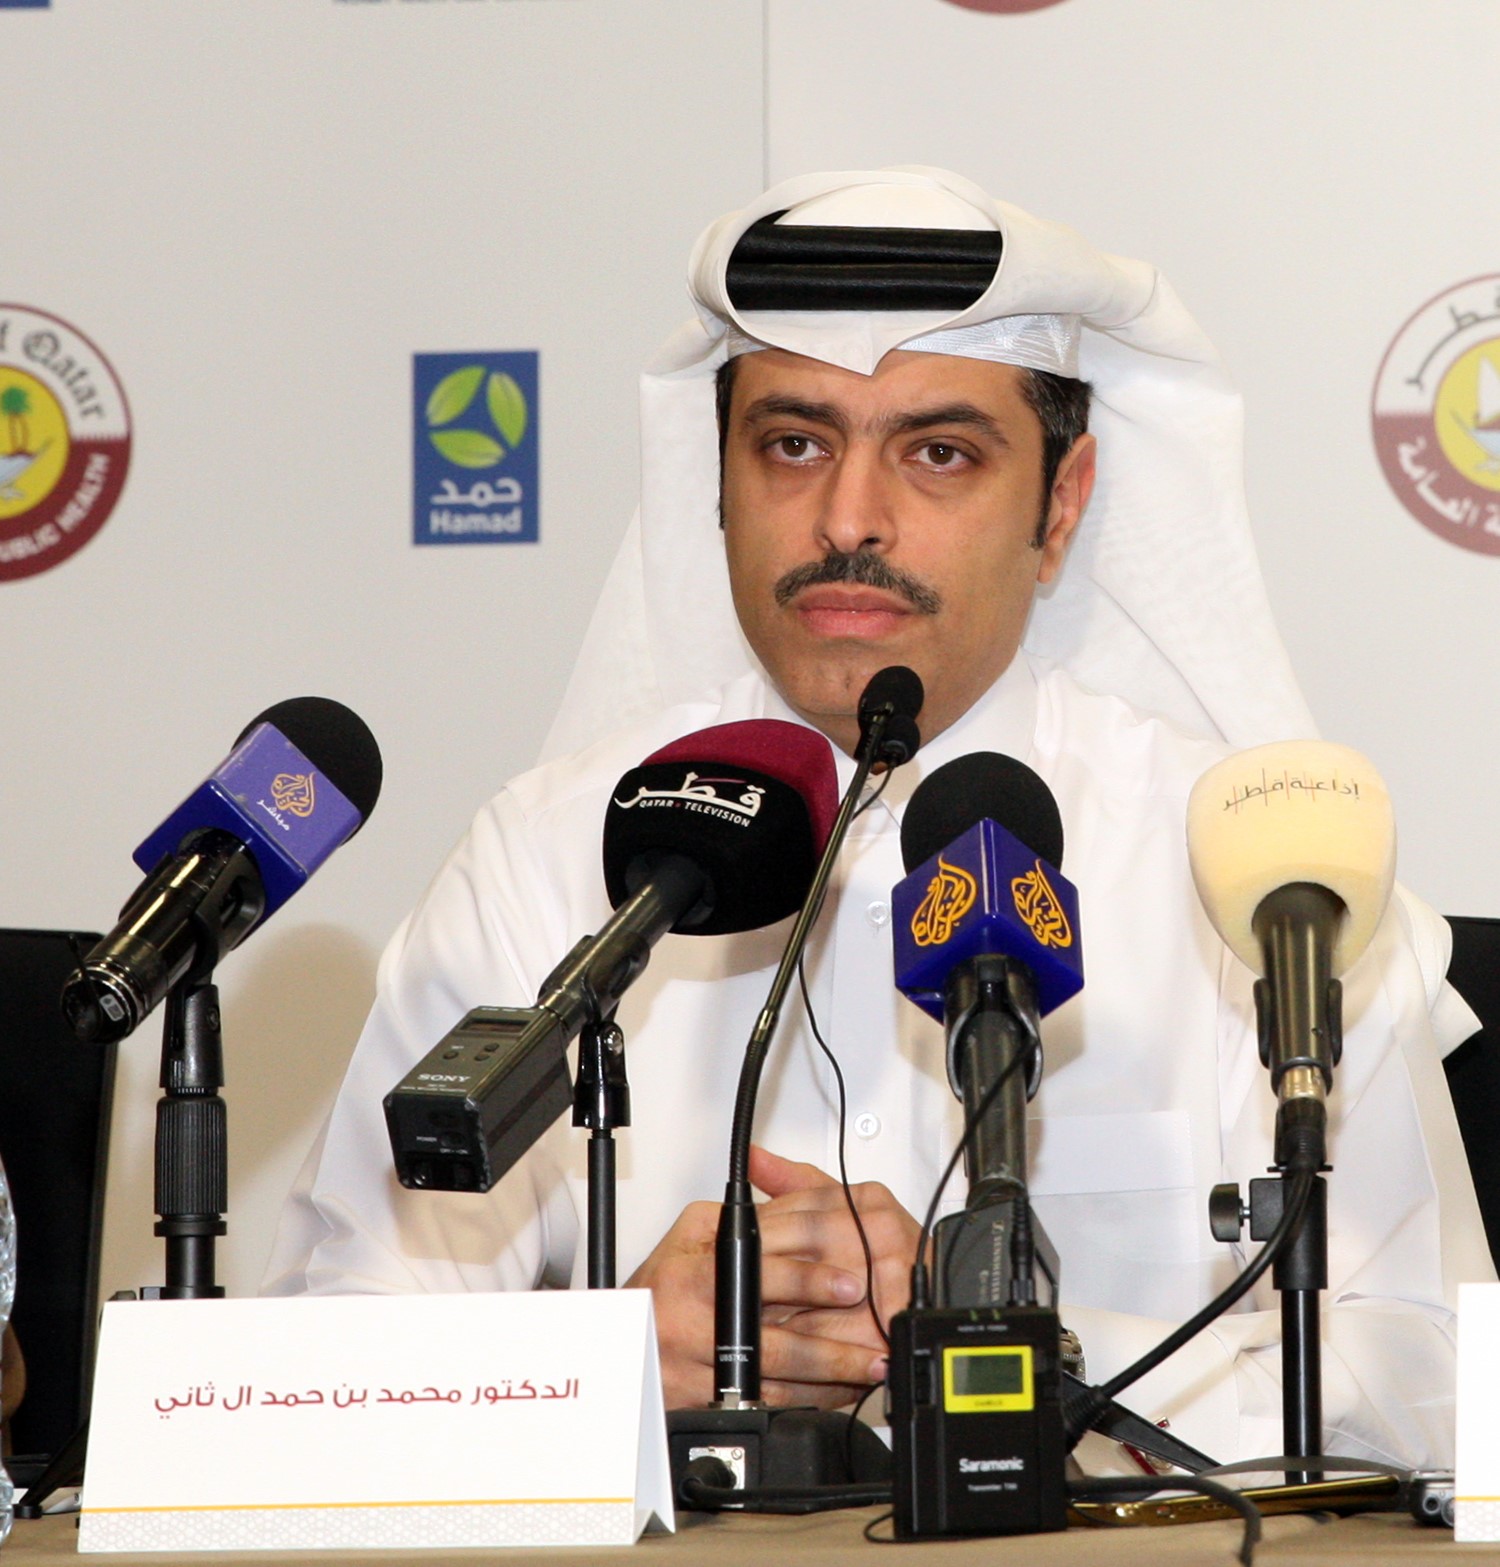 The Health Ministry's public health chief Mohammad bin Hamad Al Thani